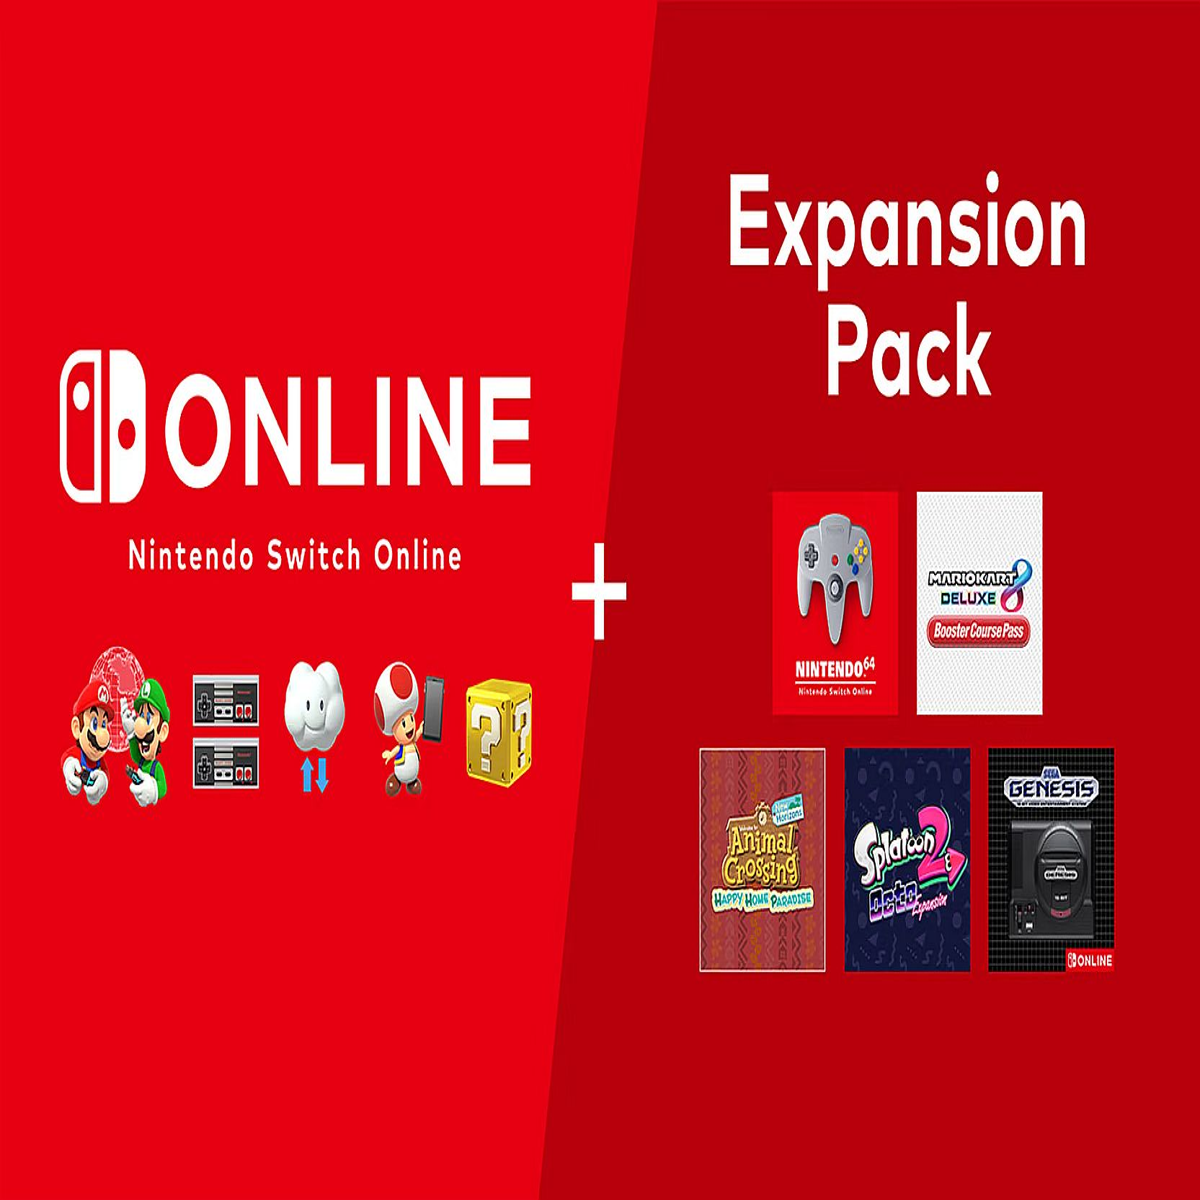 GoldenEye 007 – Nintendo Switch Online + Expansion Pack Trailer : r/Games